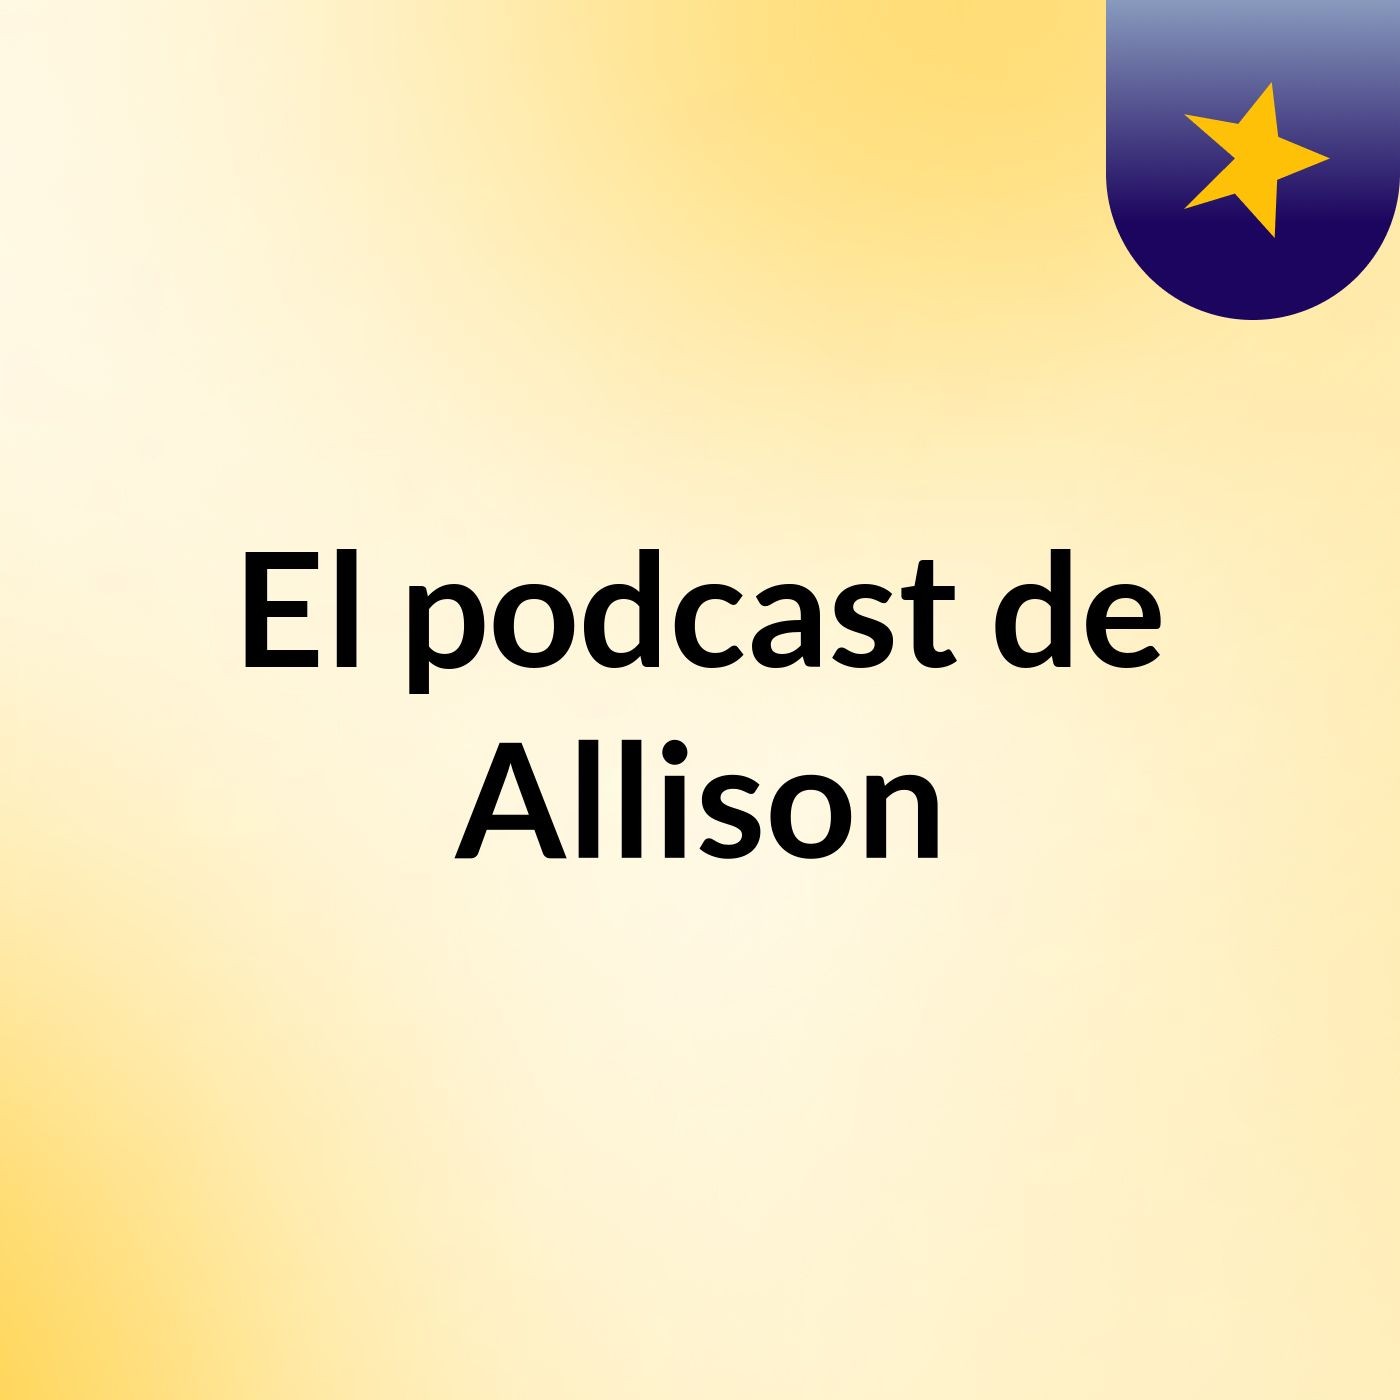 El podcast de Allison